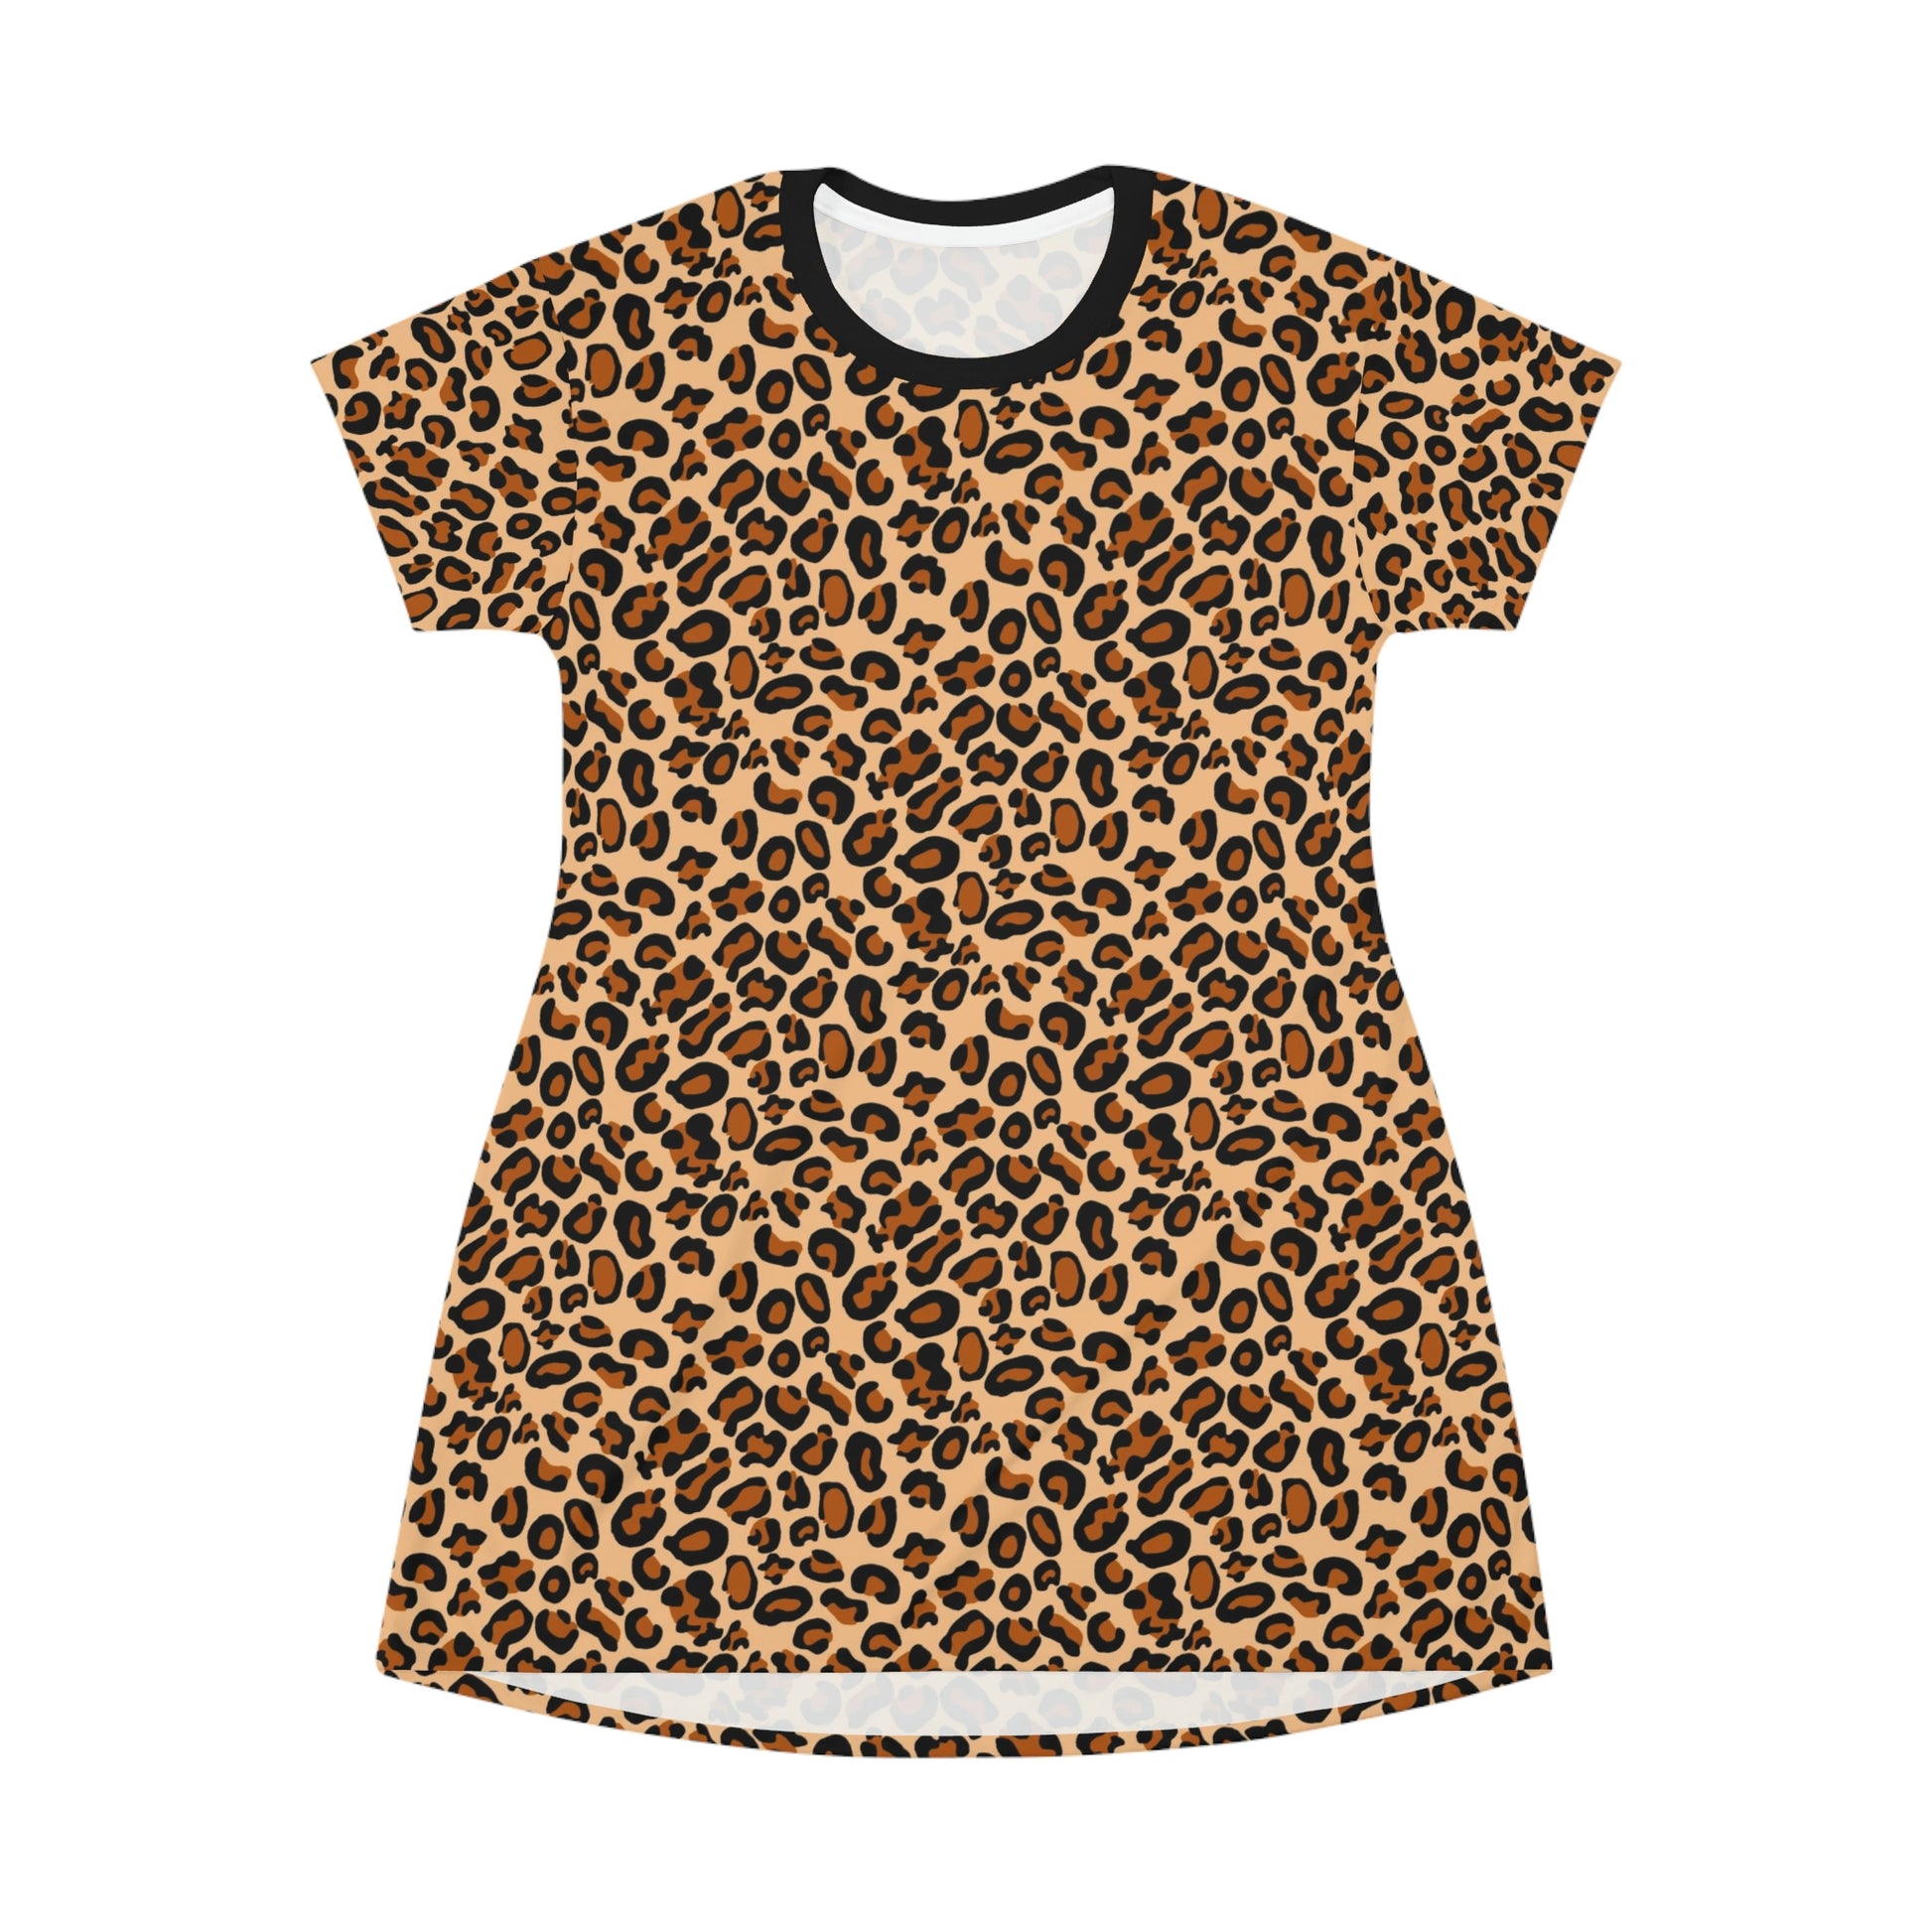 Leopard Tshirt Dress, Animal Print Cheetah Women Summer Beach Cute Festival Party Casual Designer Short Sleeve Girls Tee Starcove Fashion